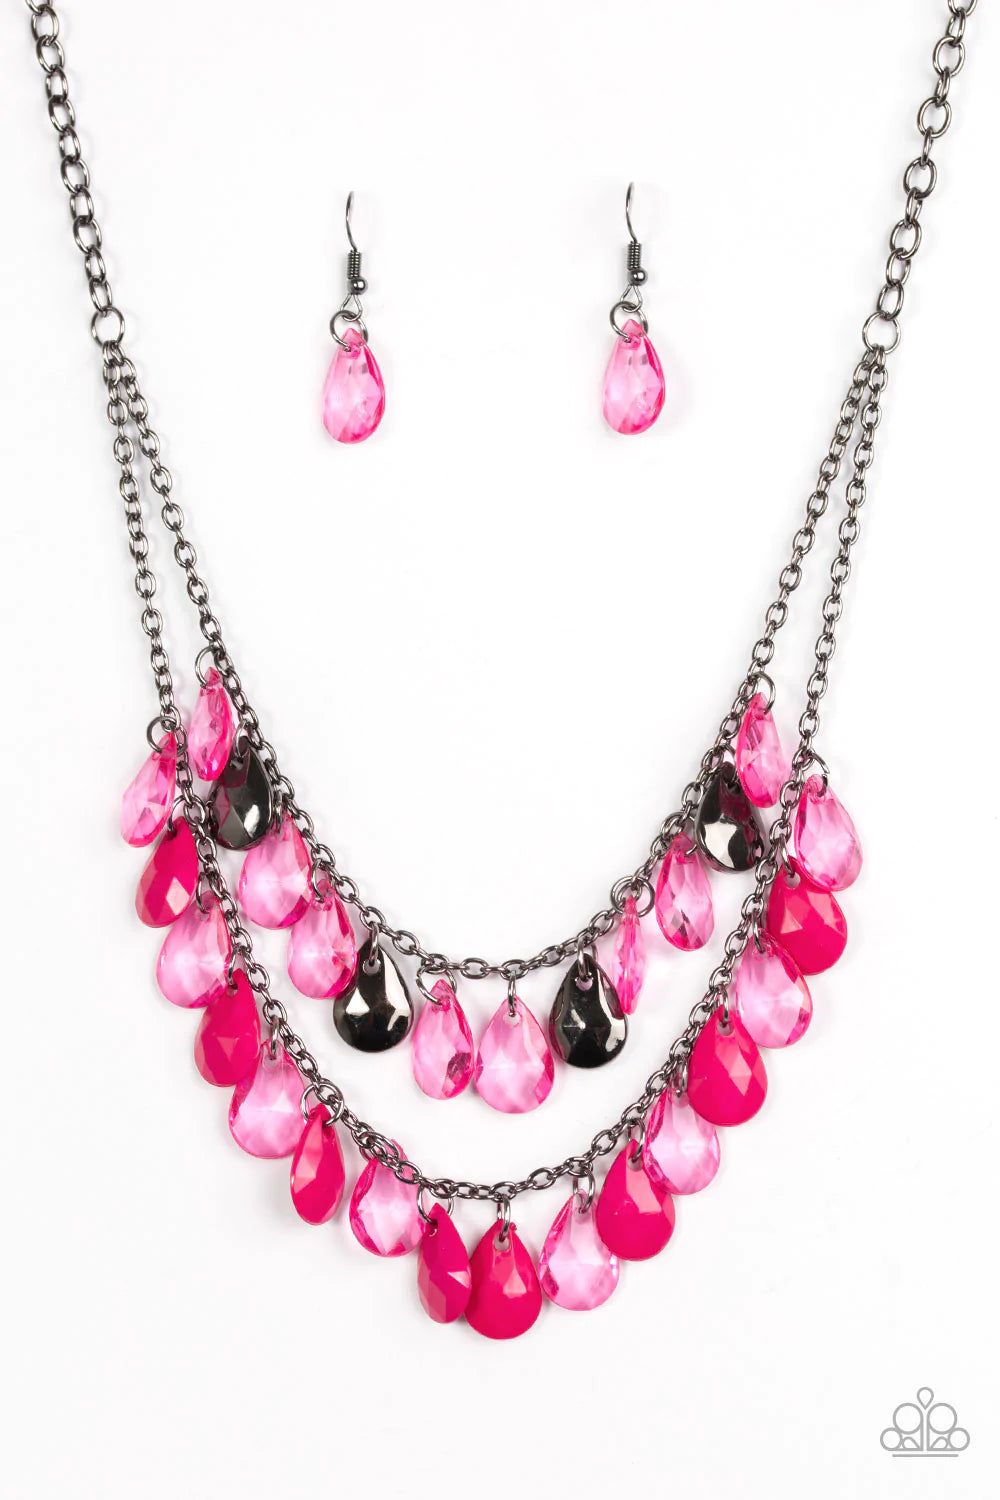 Paparazzi Necklace ~ Storm Warning - Pink